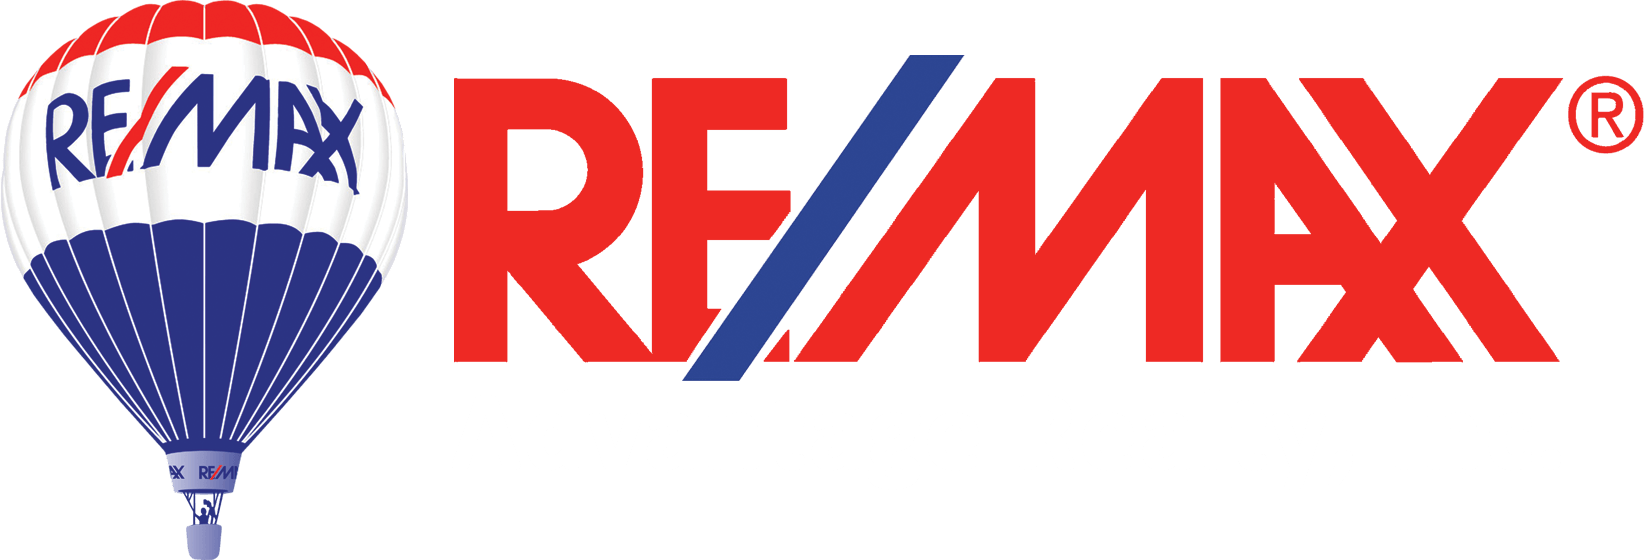 RE/MAX Logo - remax-logo - Prewitt Group